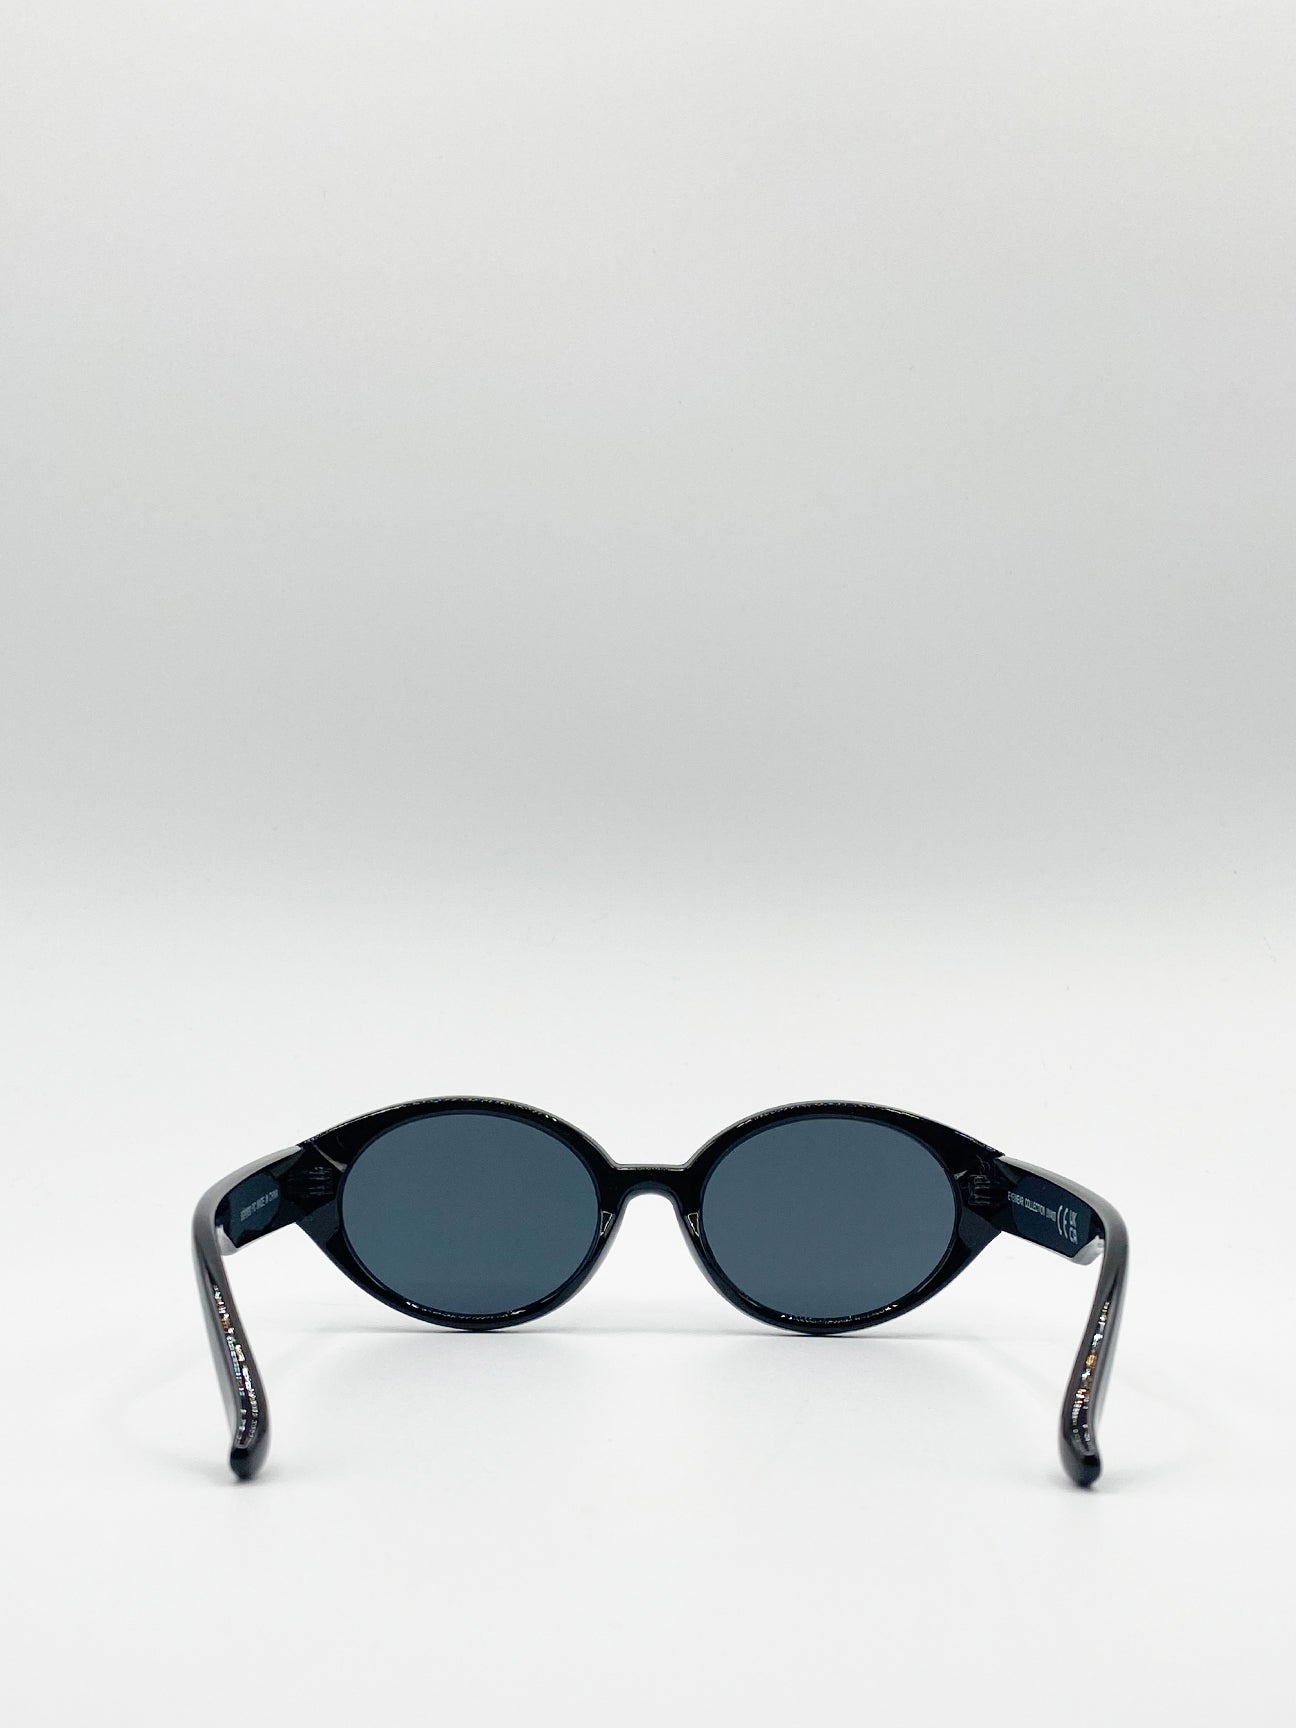 Oval Sunglasses In Black